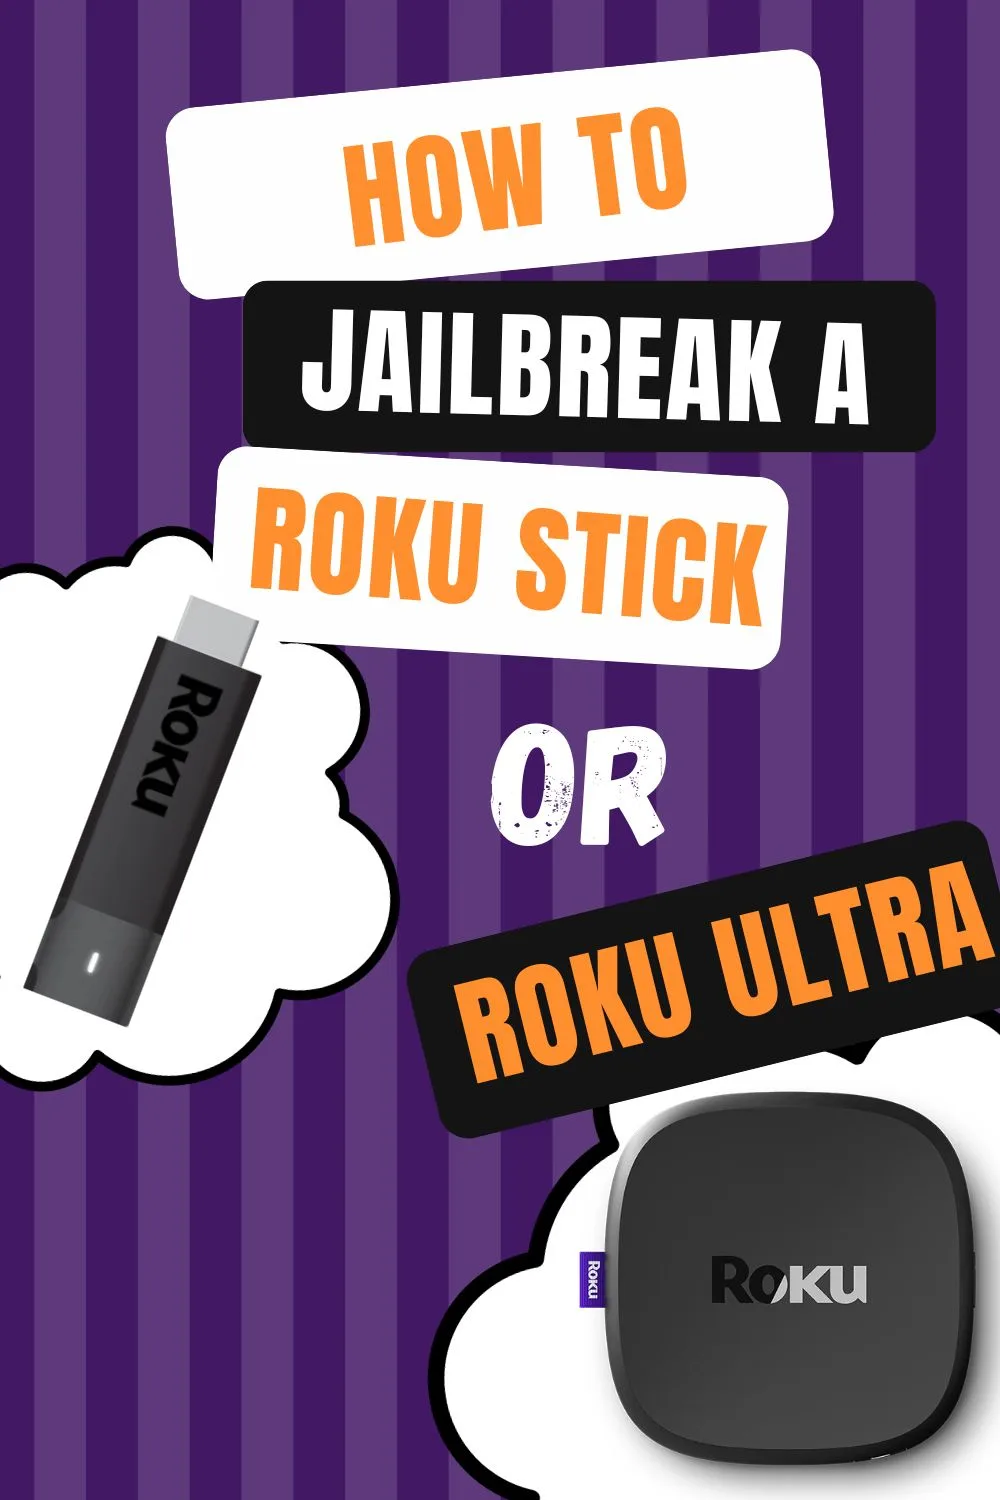 How to jailbreak a roku stick or roku ultra